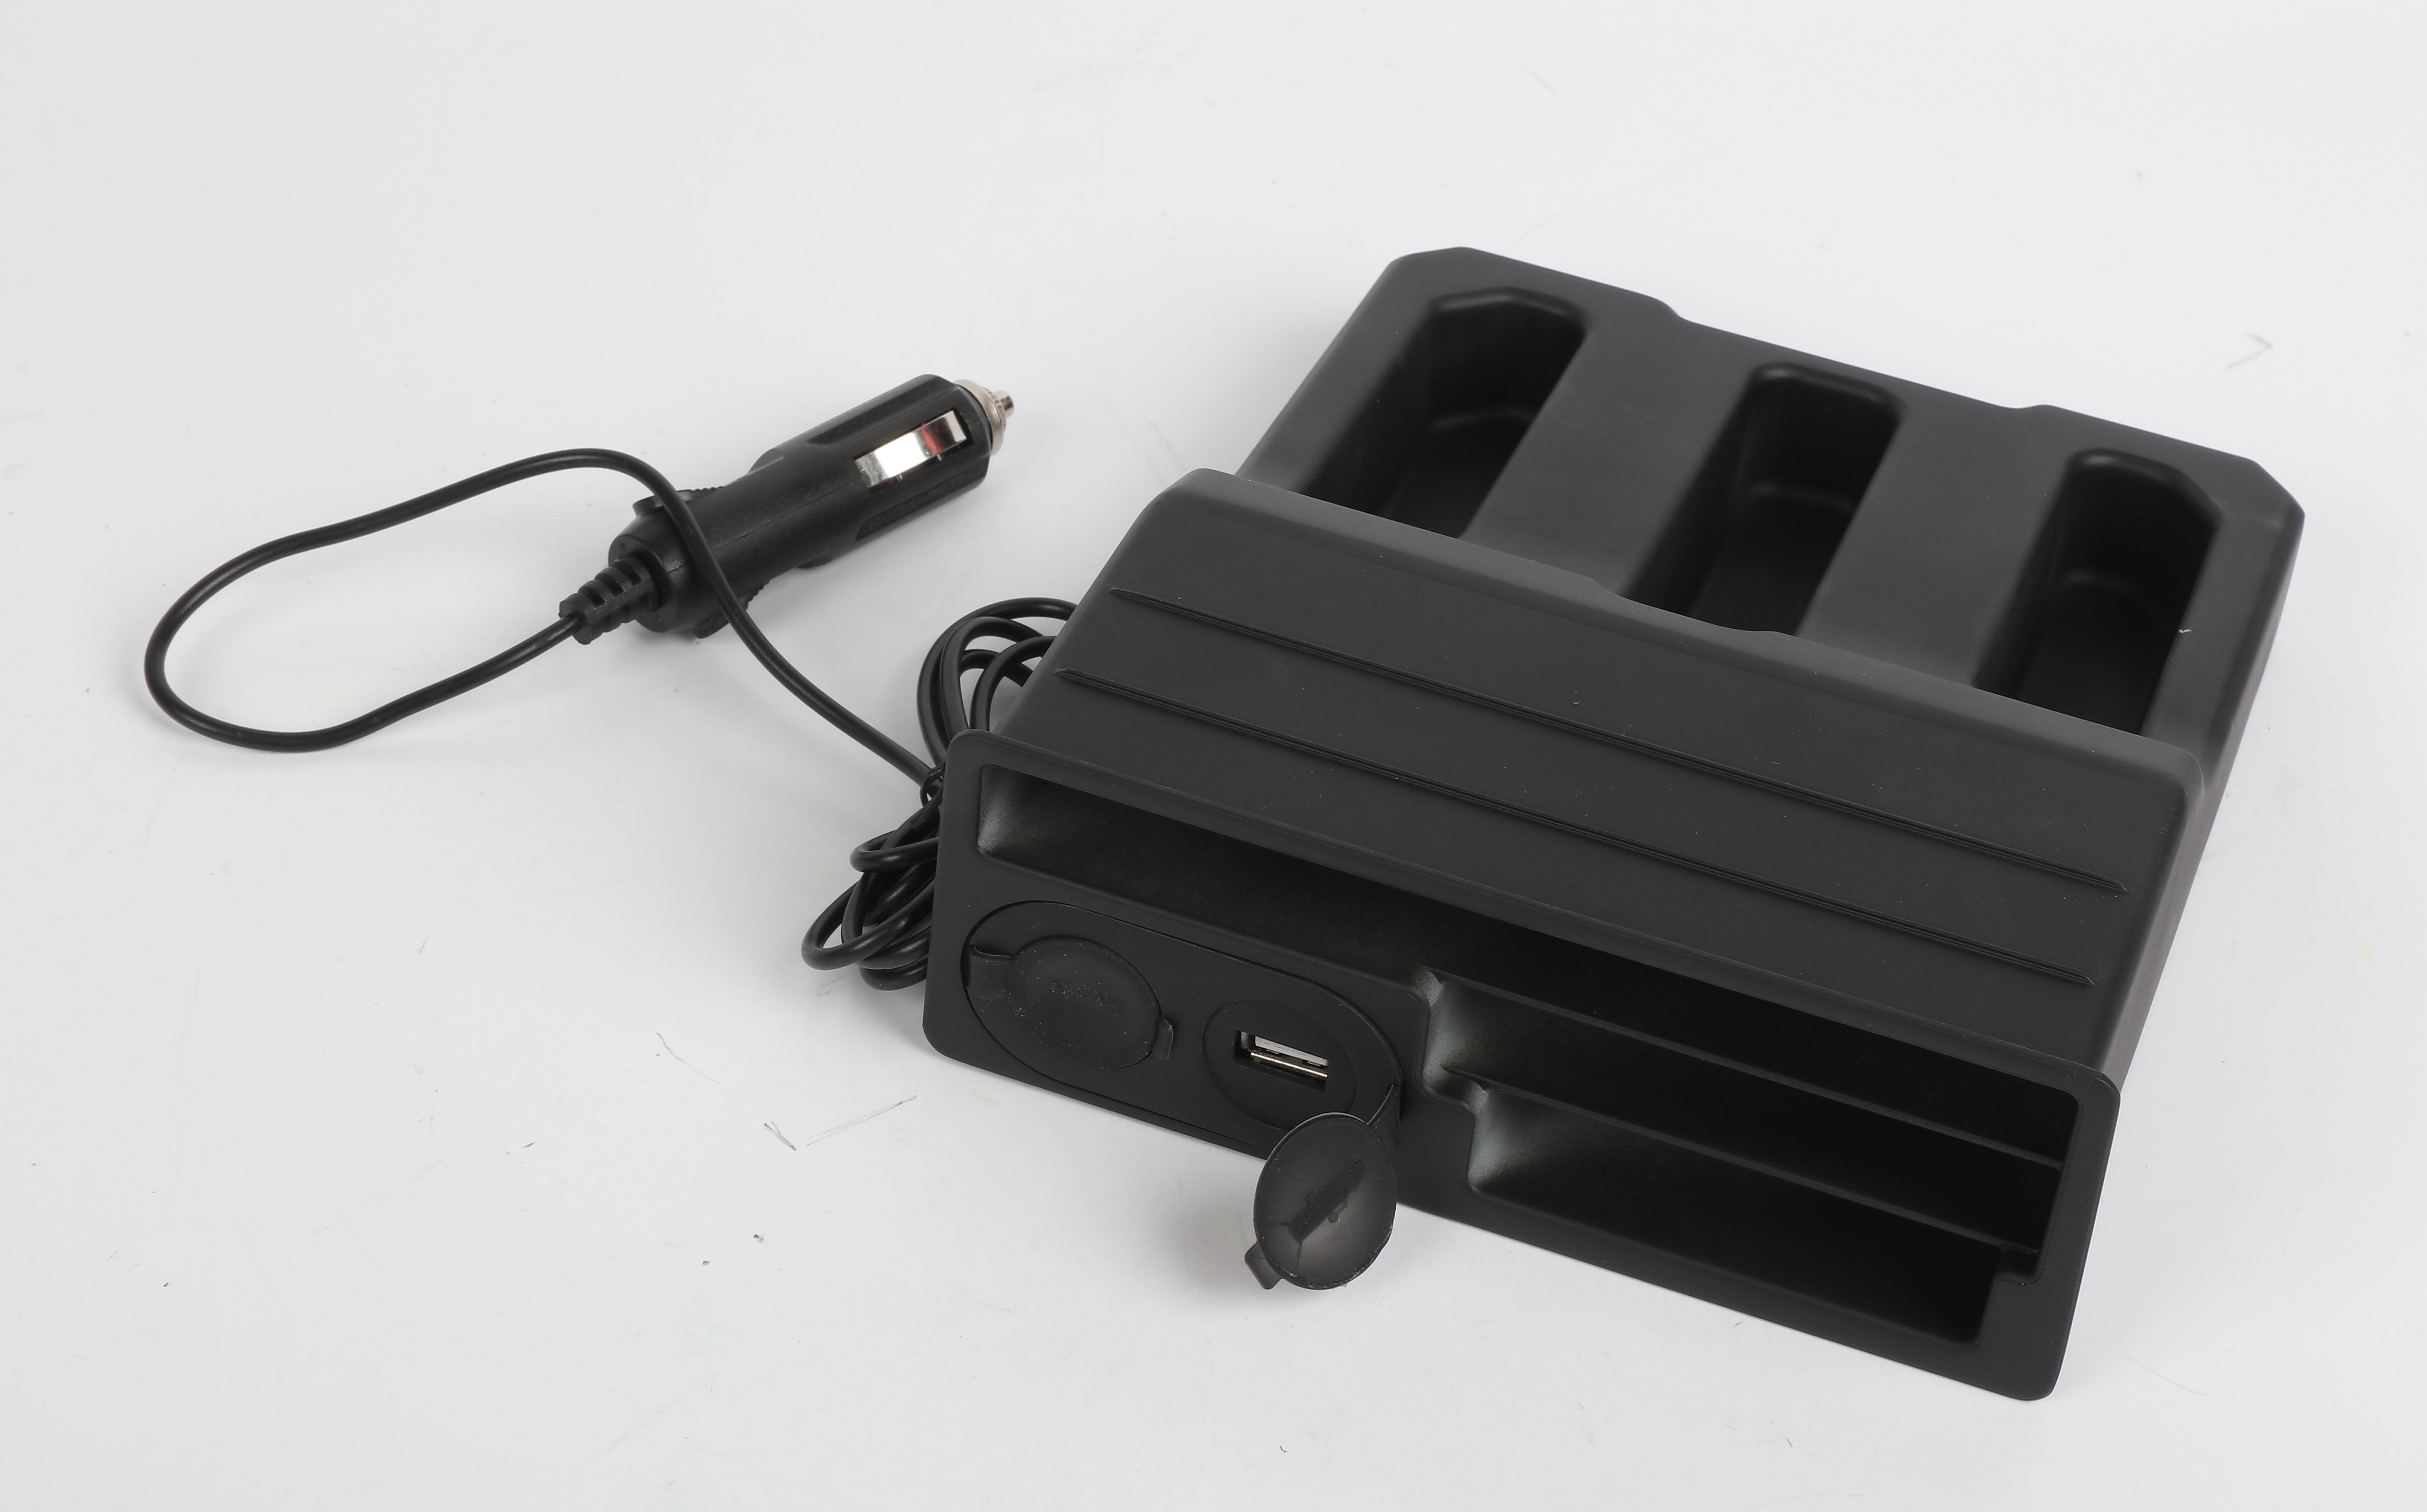 Auto Drive Vehicle 12V USB Charger Organizer, Multi-size Space, Black